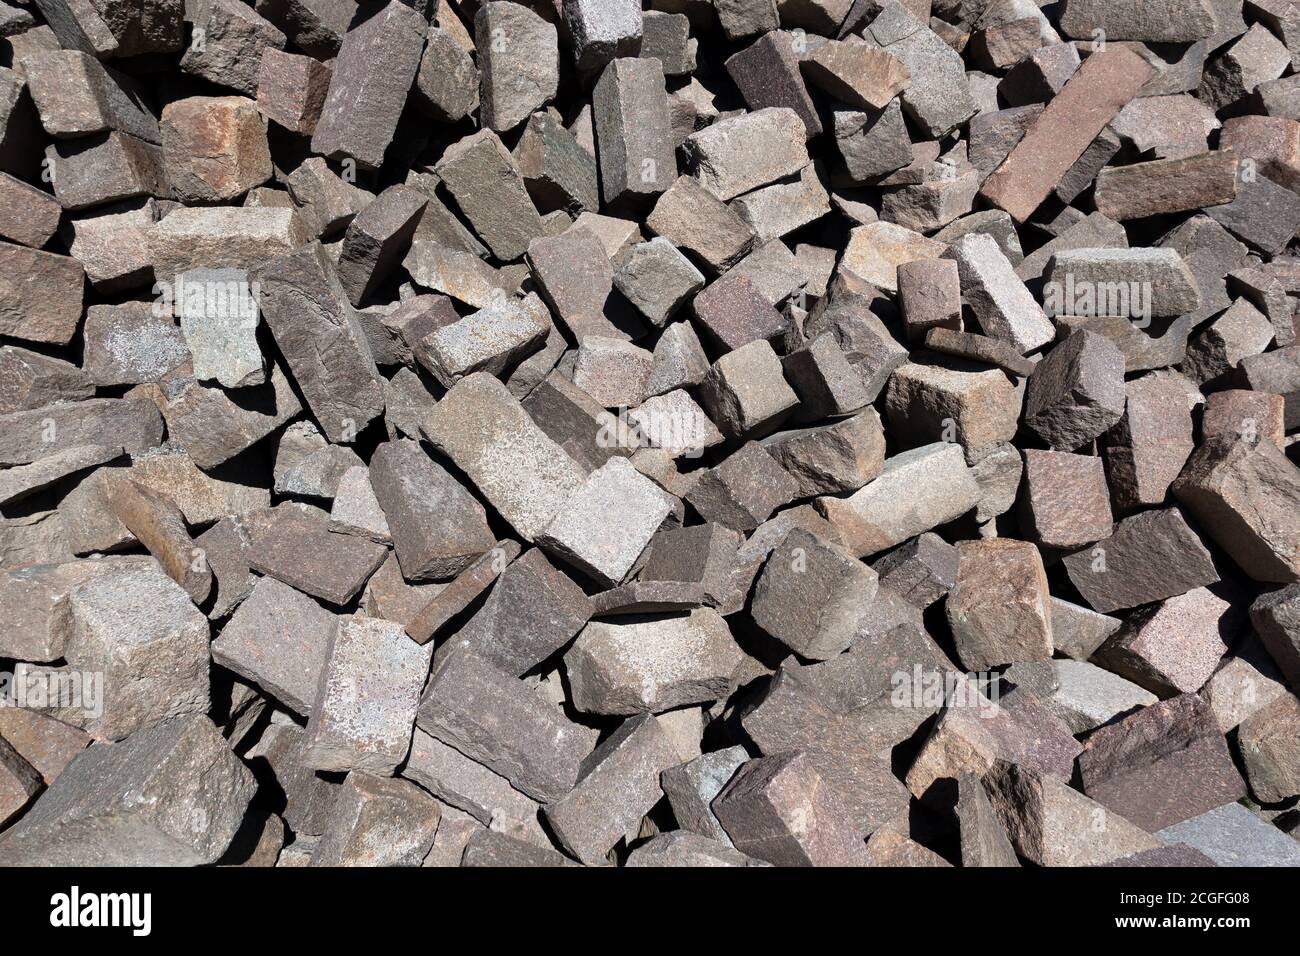 Pile of granite paving stones in closeup Stock Photo